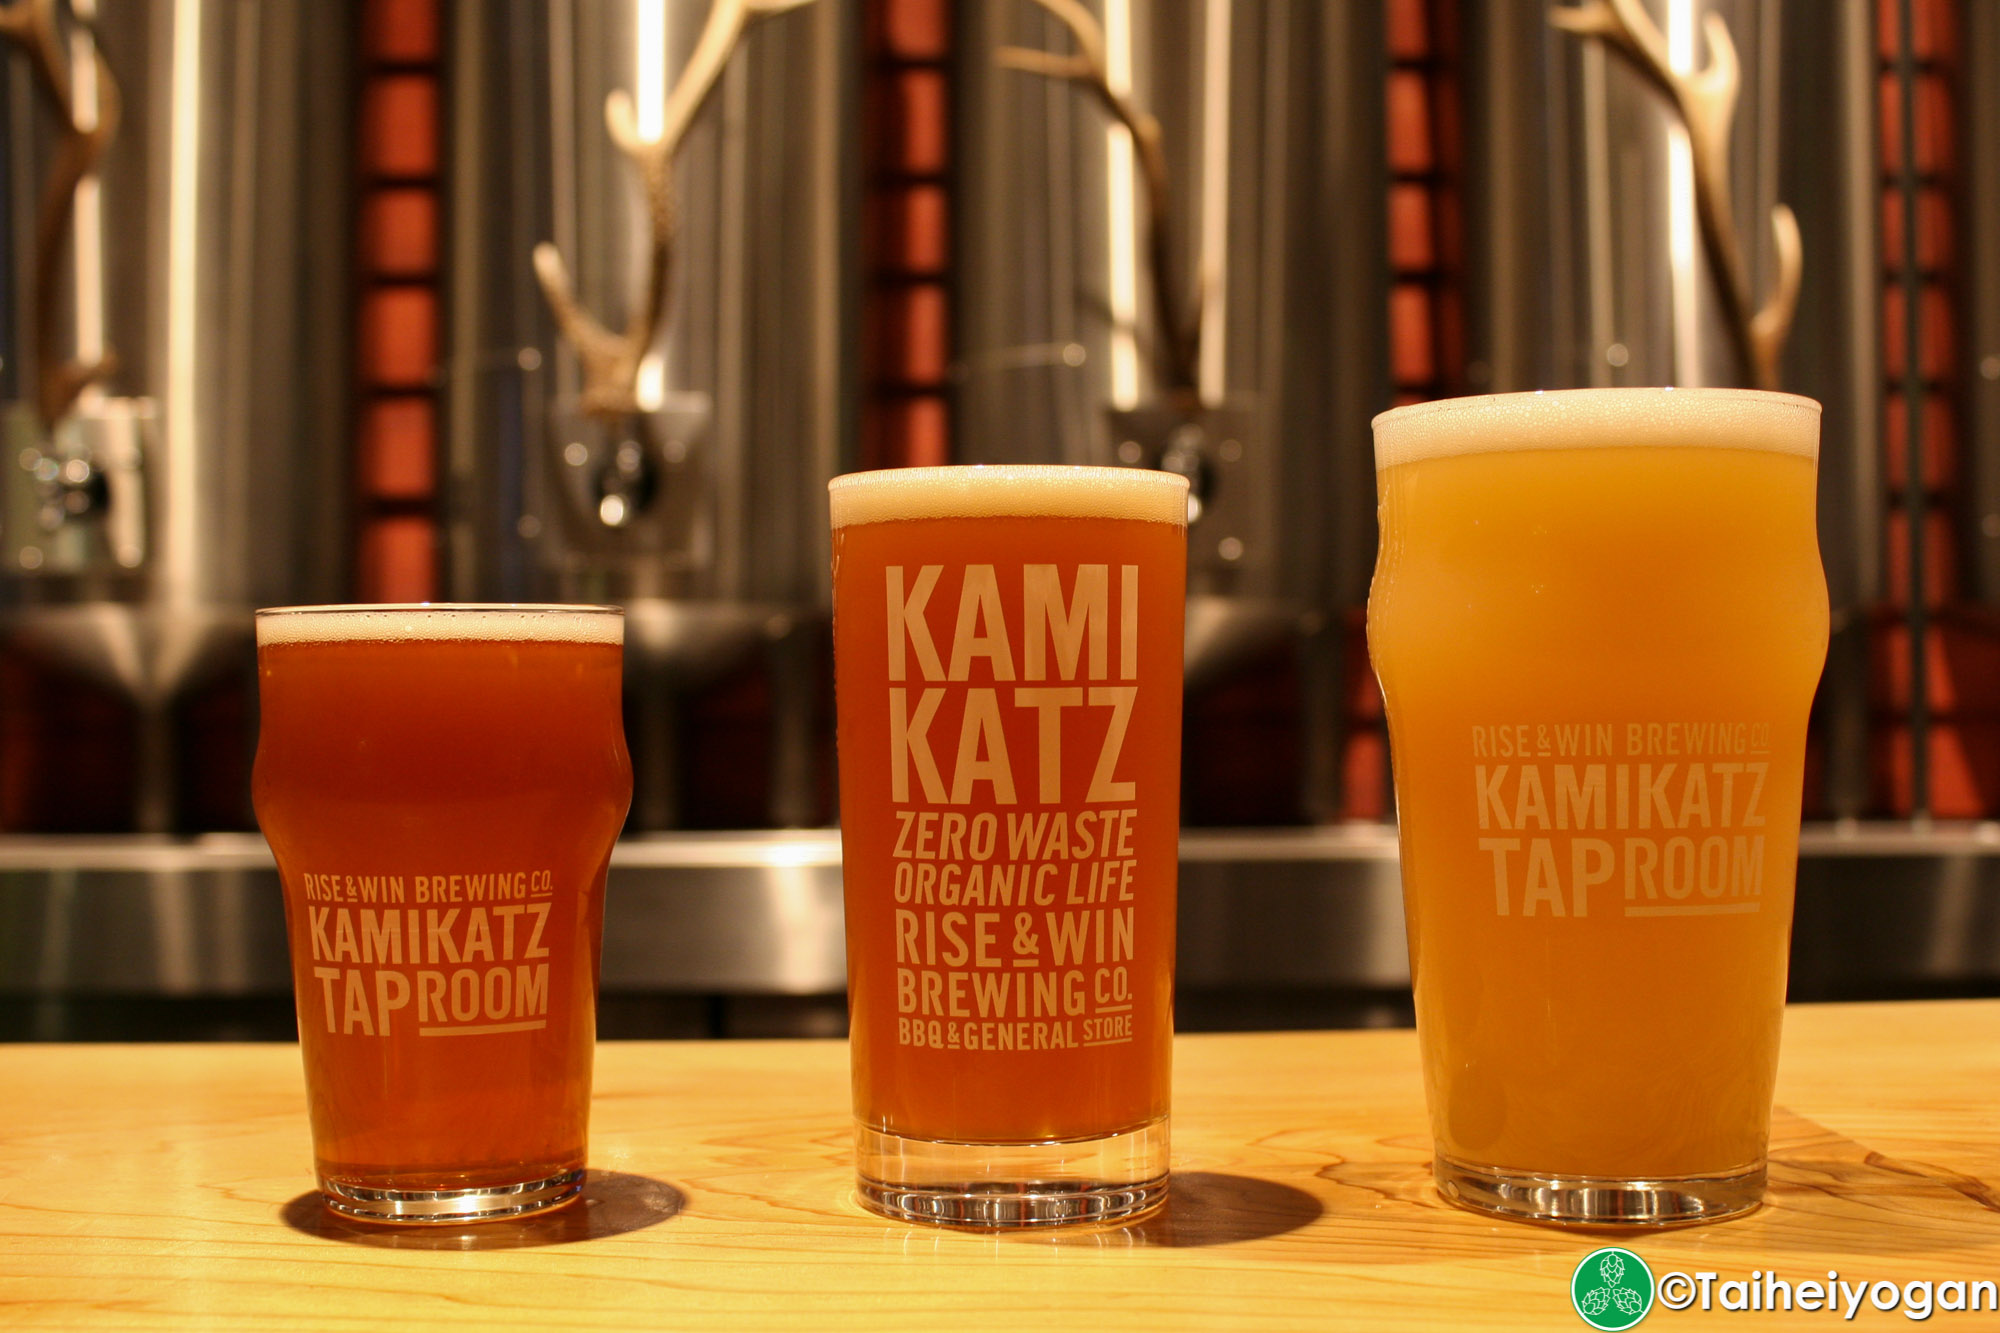 Kamikatz Taproom (Rise & Win Brewing Co.) - Menu - Kamikatz Rise & Win Brewing Craft Beer